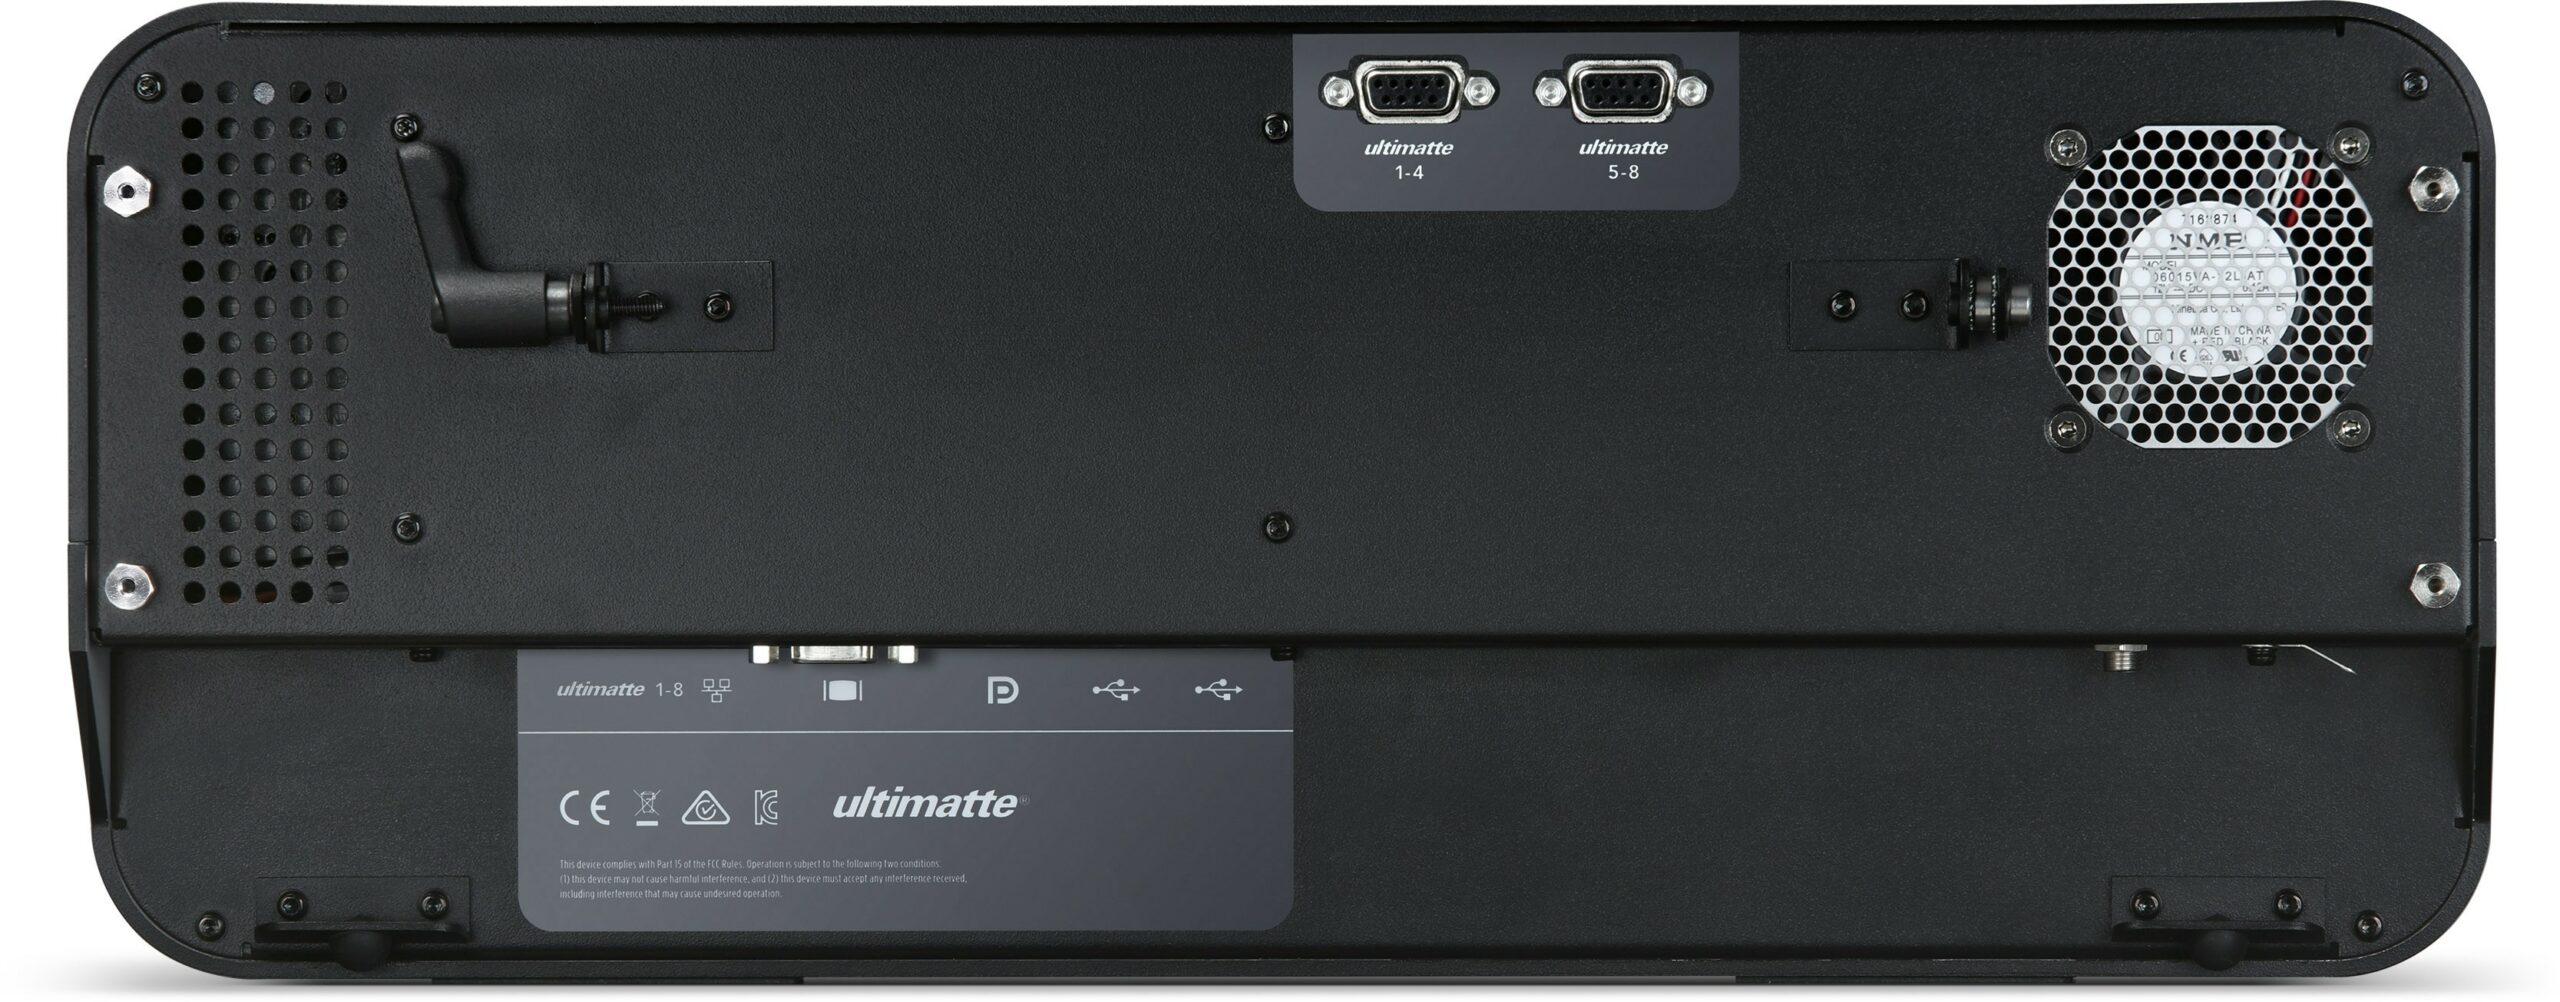 Blackmagic Ultimatte Smart Remote 4